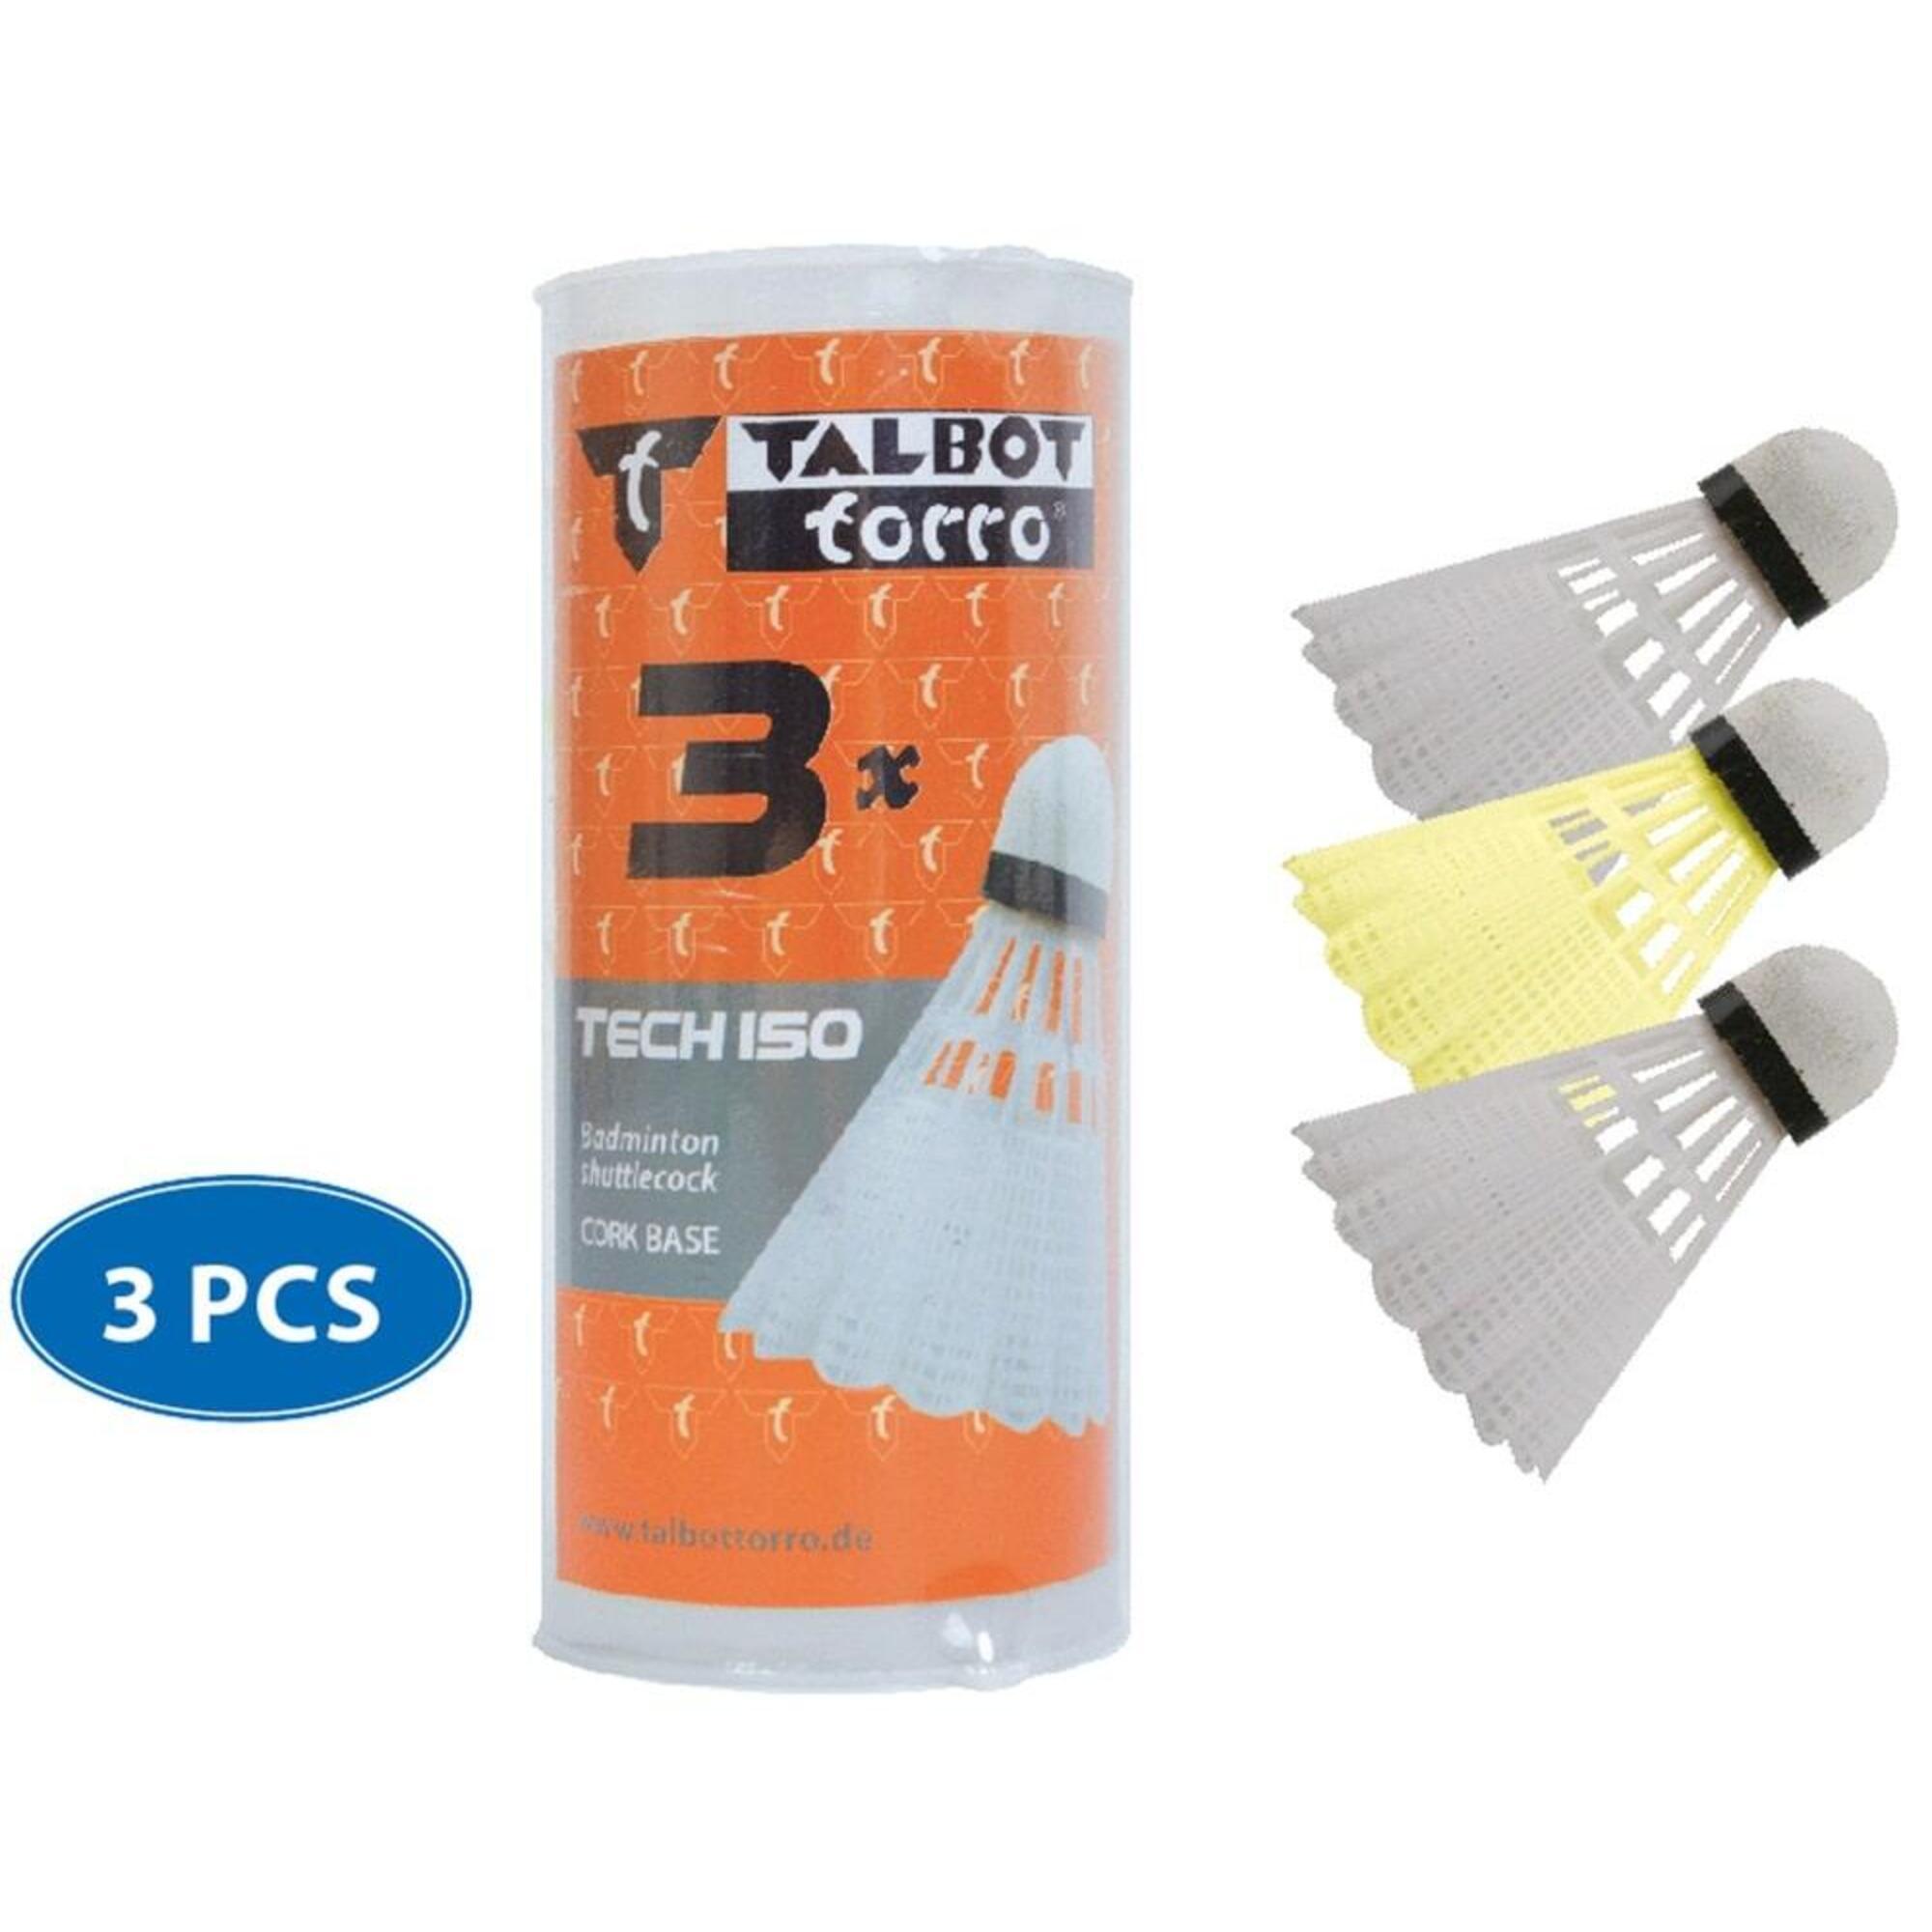 Talbot Torro White/yellow Tech 150 Synthetic Shuttlecock 3 Pack